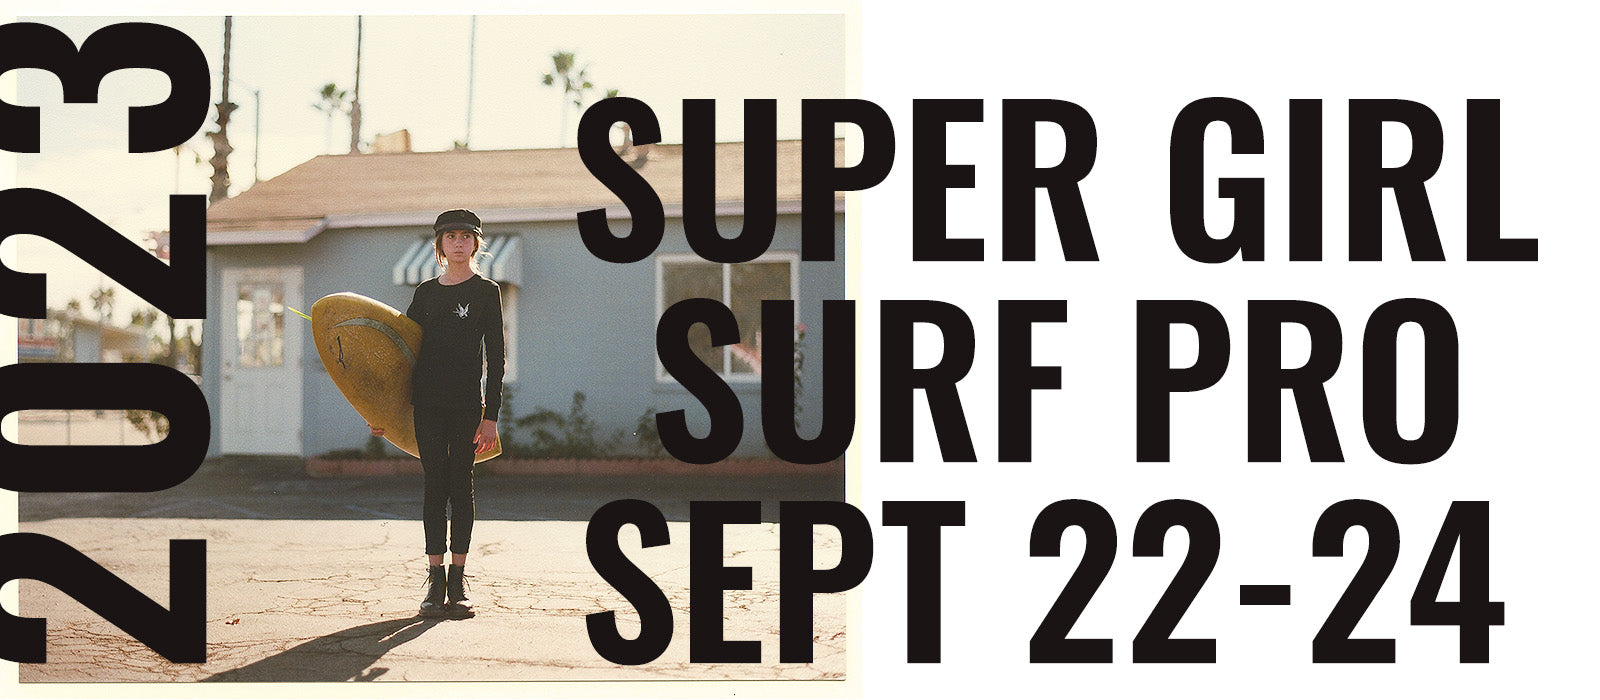 Super Girl Pro Series - Super Girl Surf Pro - Oceanside